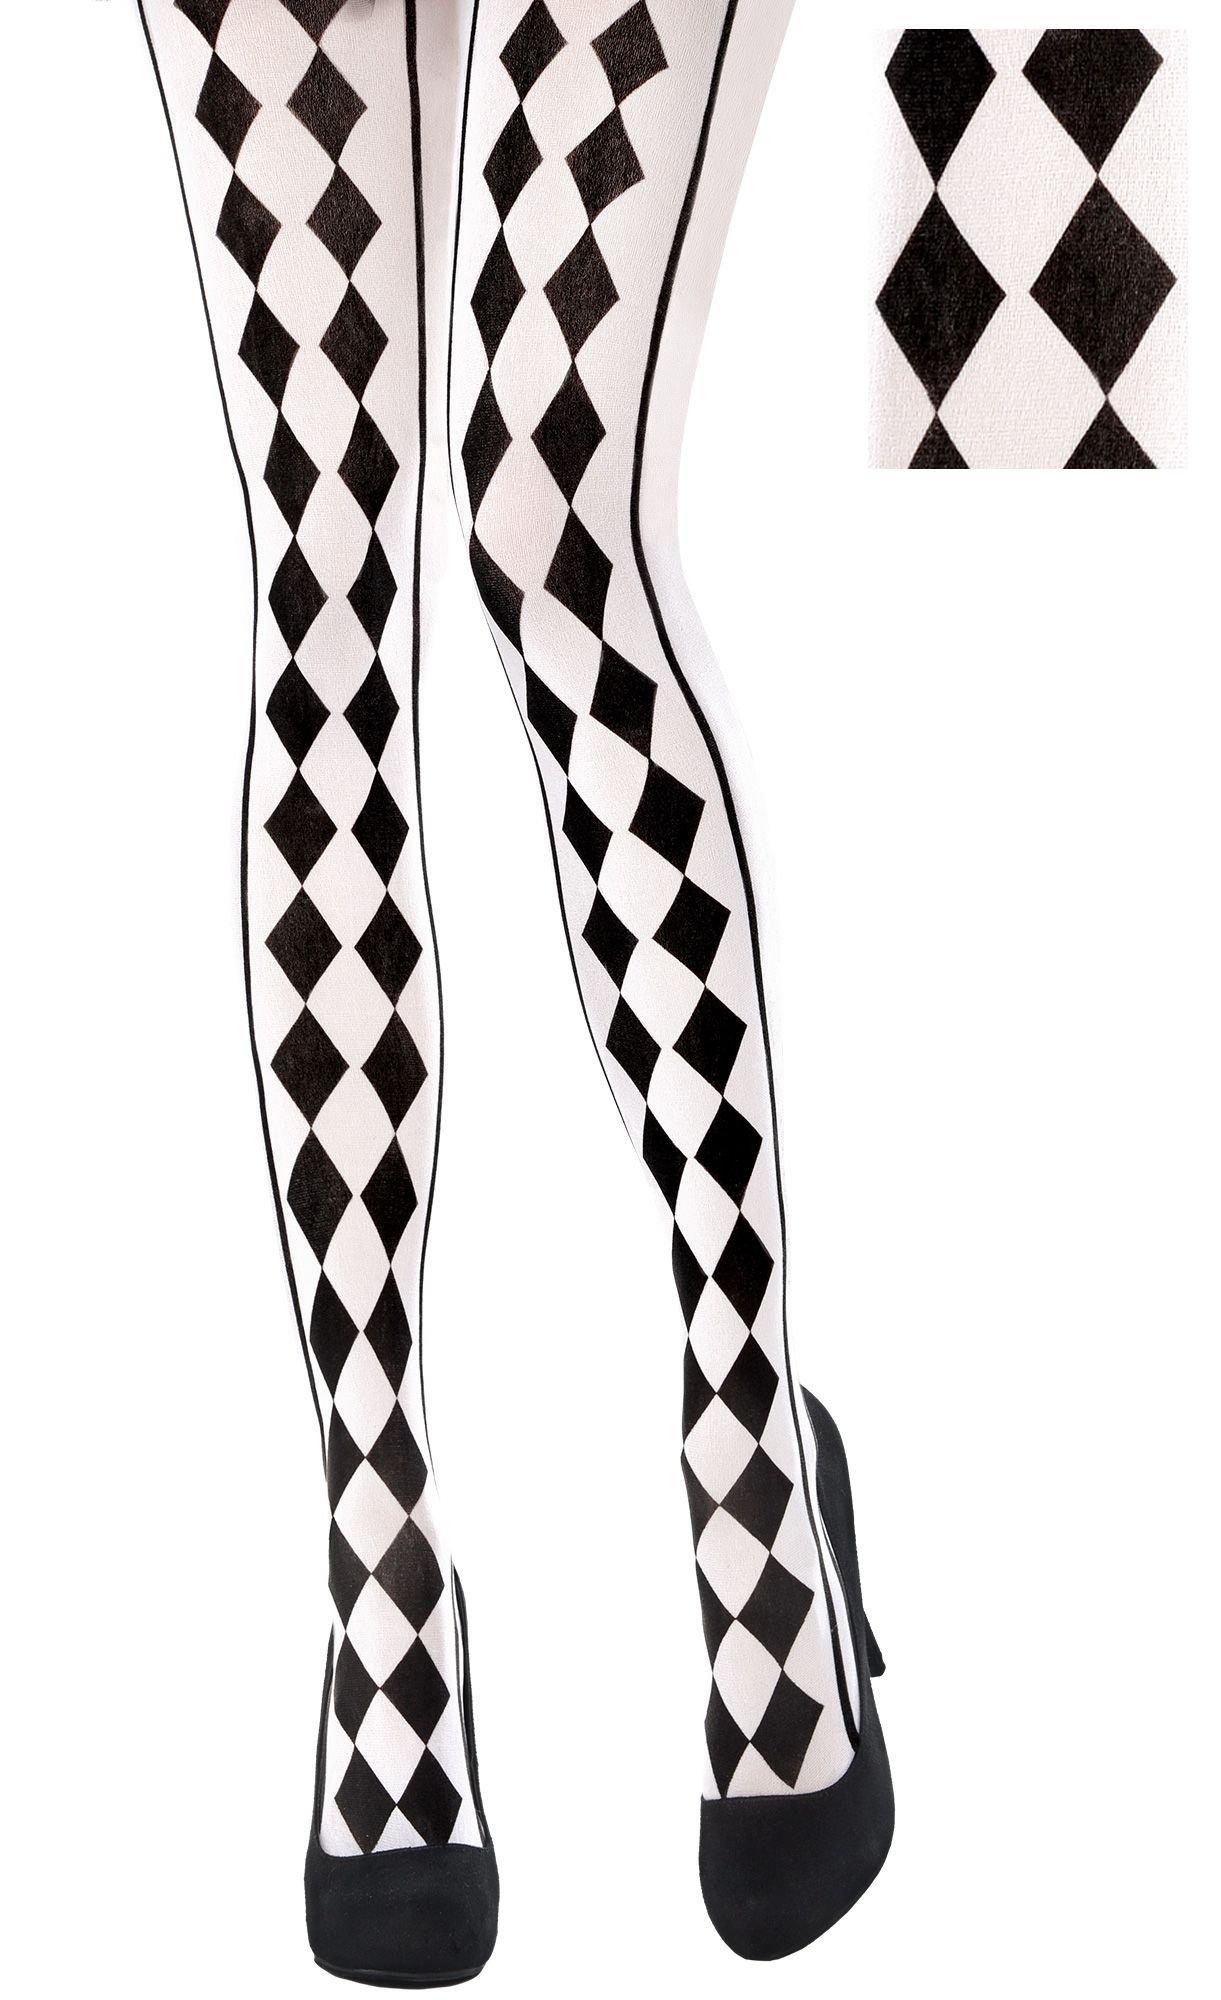 Checkered tights